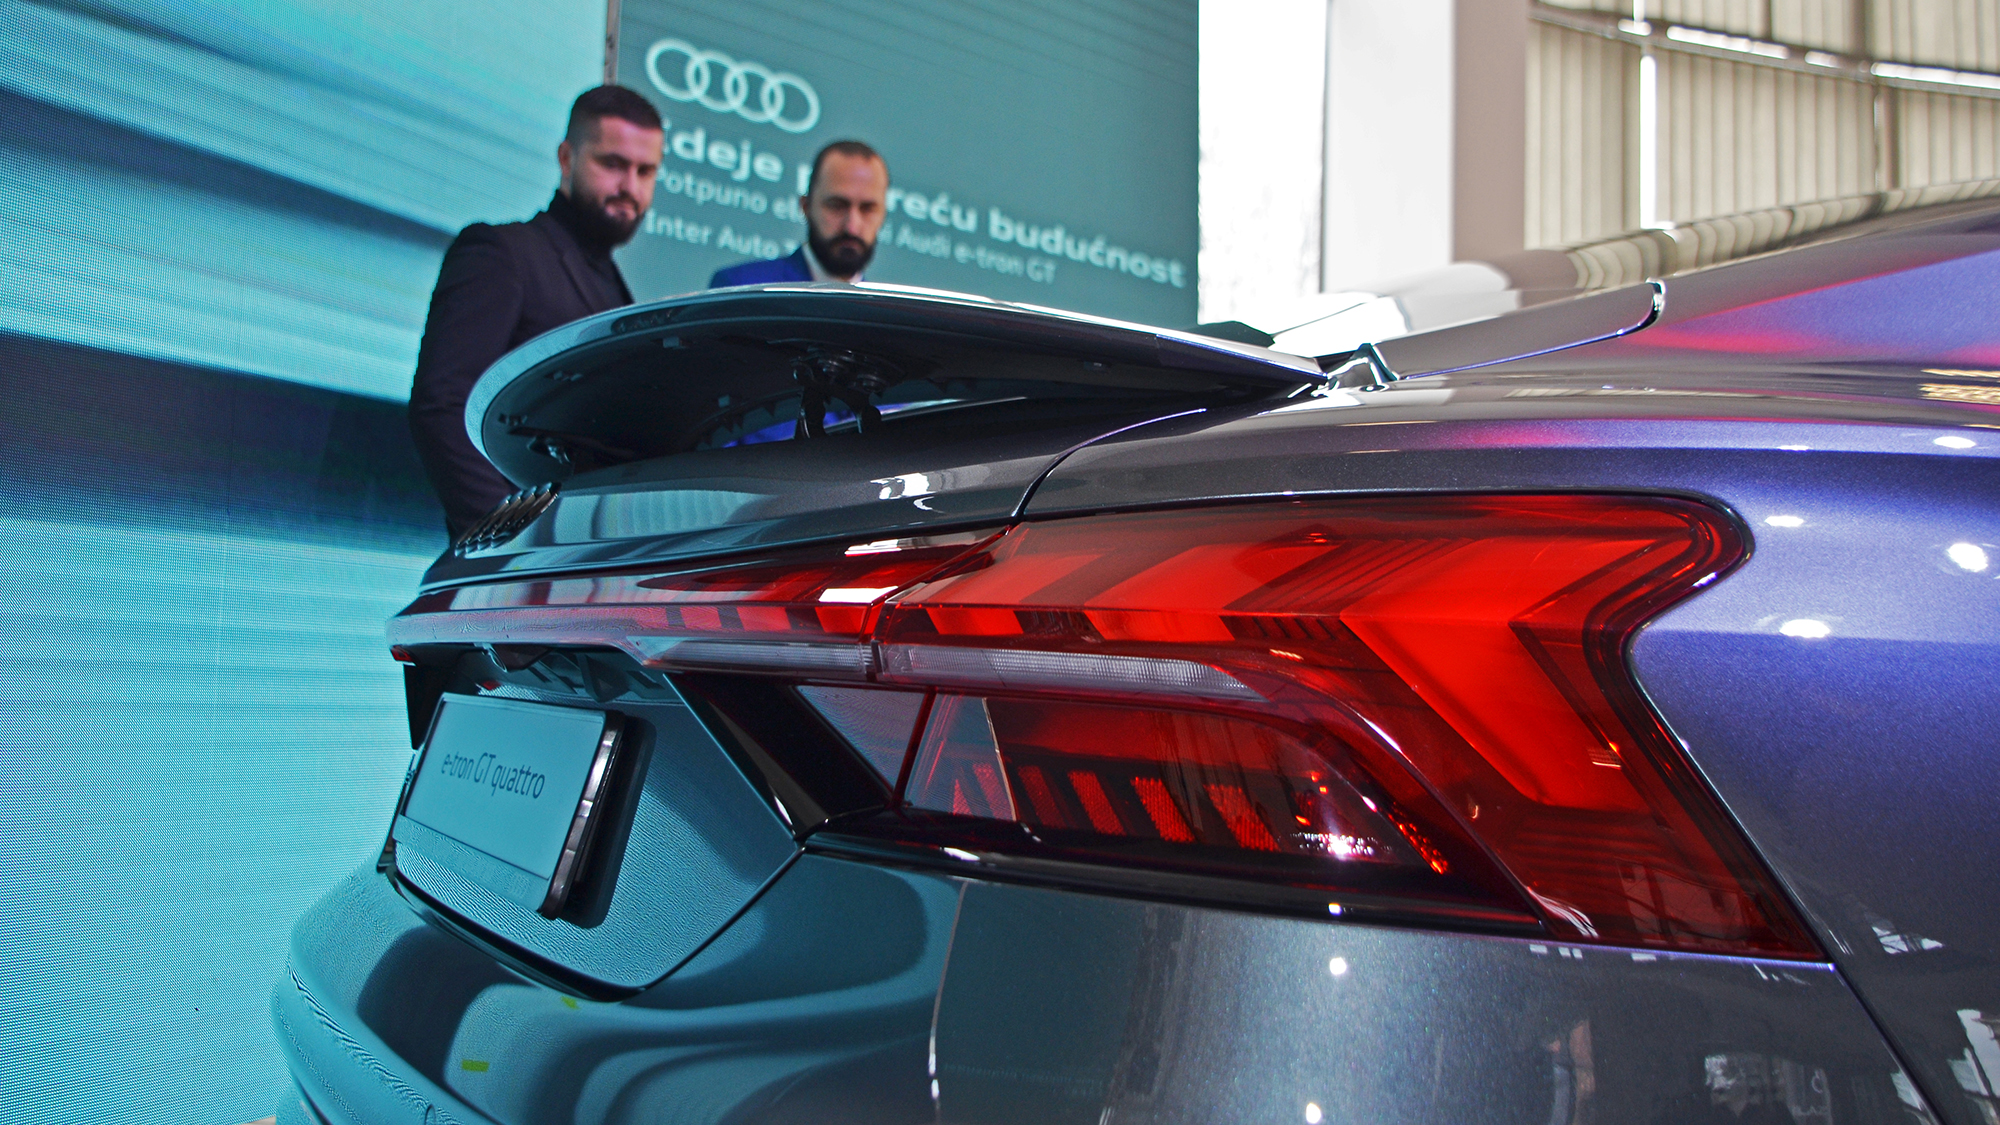 Promocija Audi e-tron GT quattro u Inter Auto